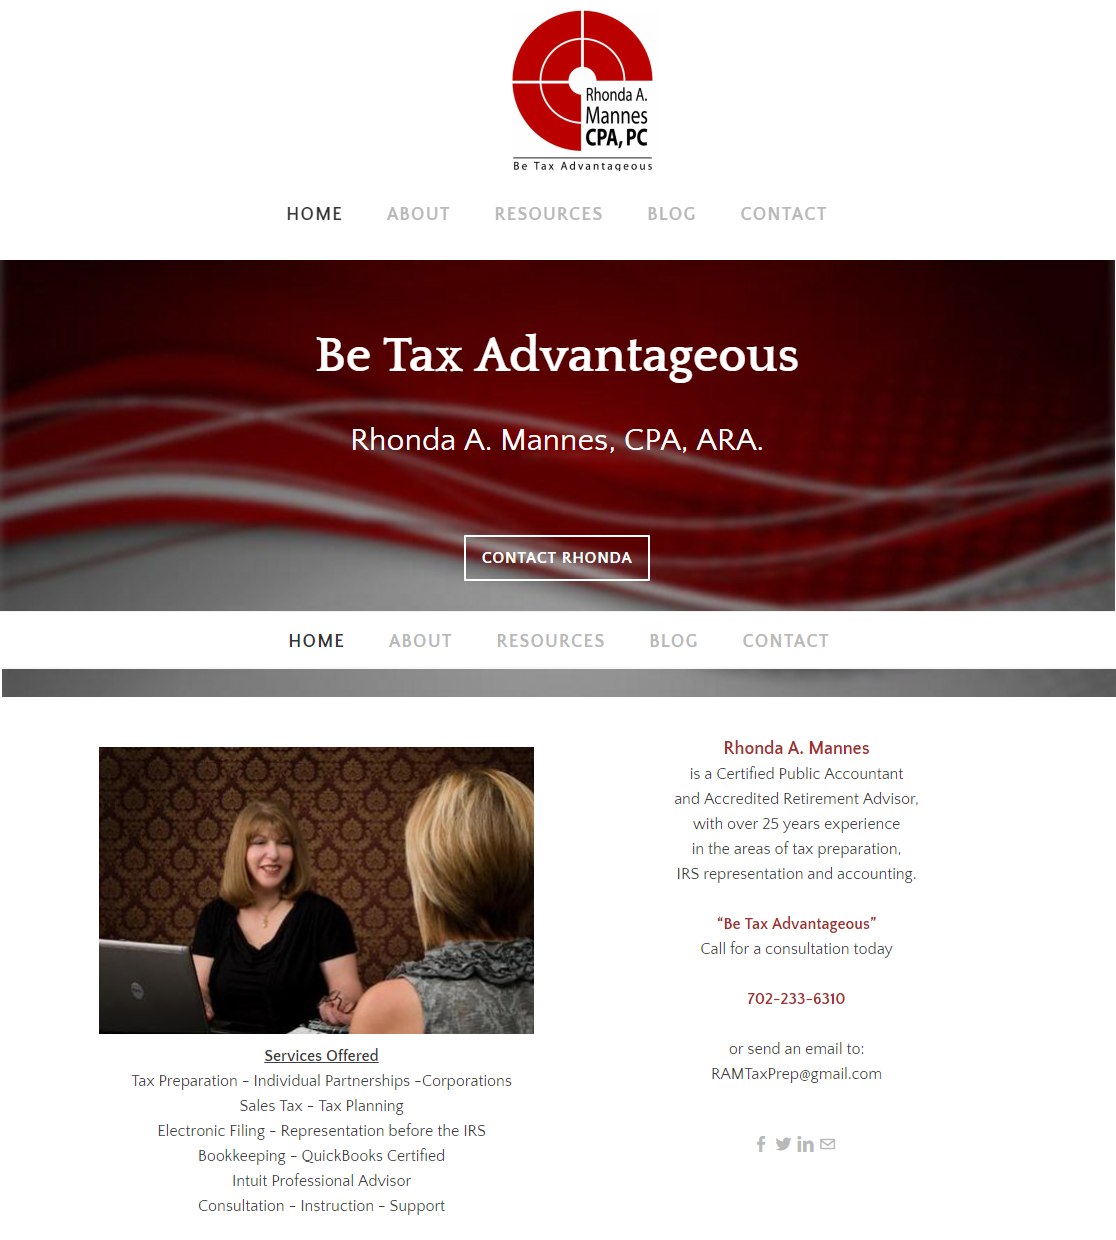 Rhonda A. Mannes RAM Tax Prep